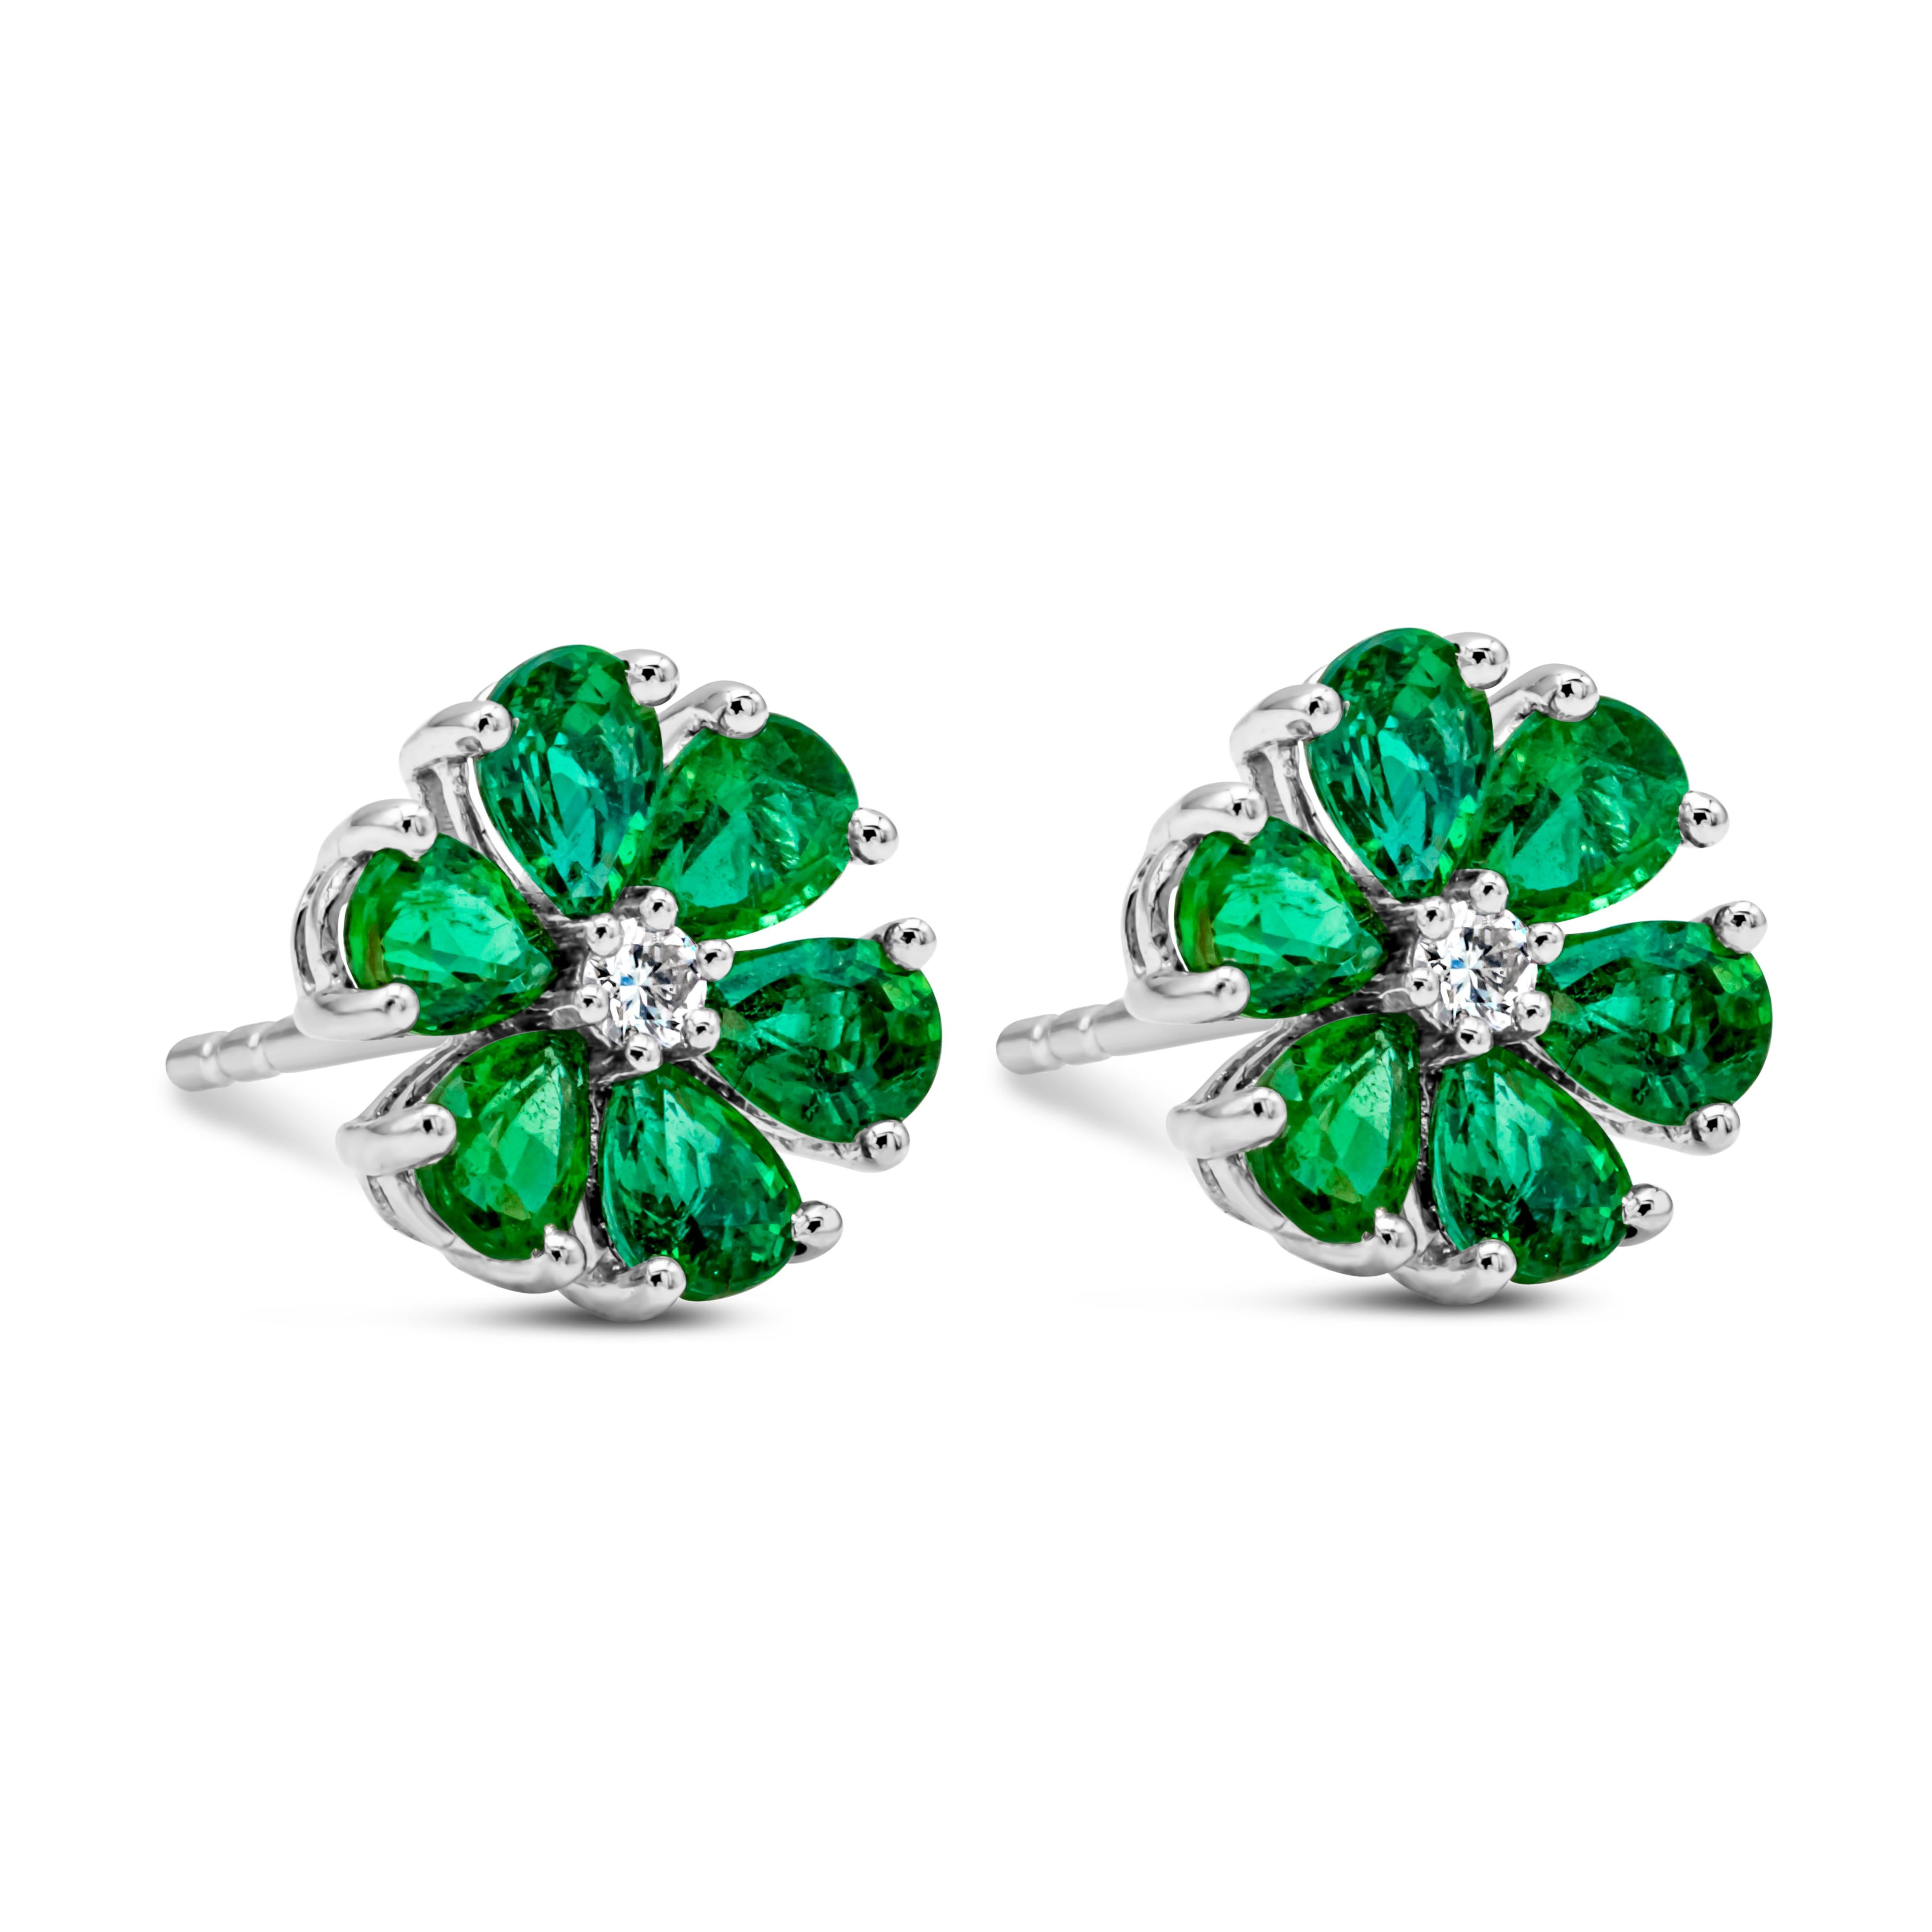 Contemporary Roman Malakov 1.84 Carats Total Pear Shape Green Emerald & Diamond Stud Earrings For Sale